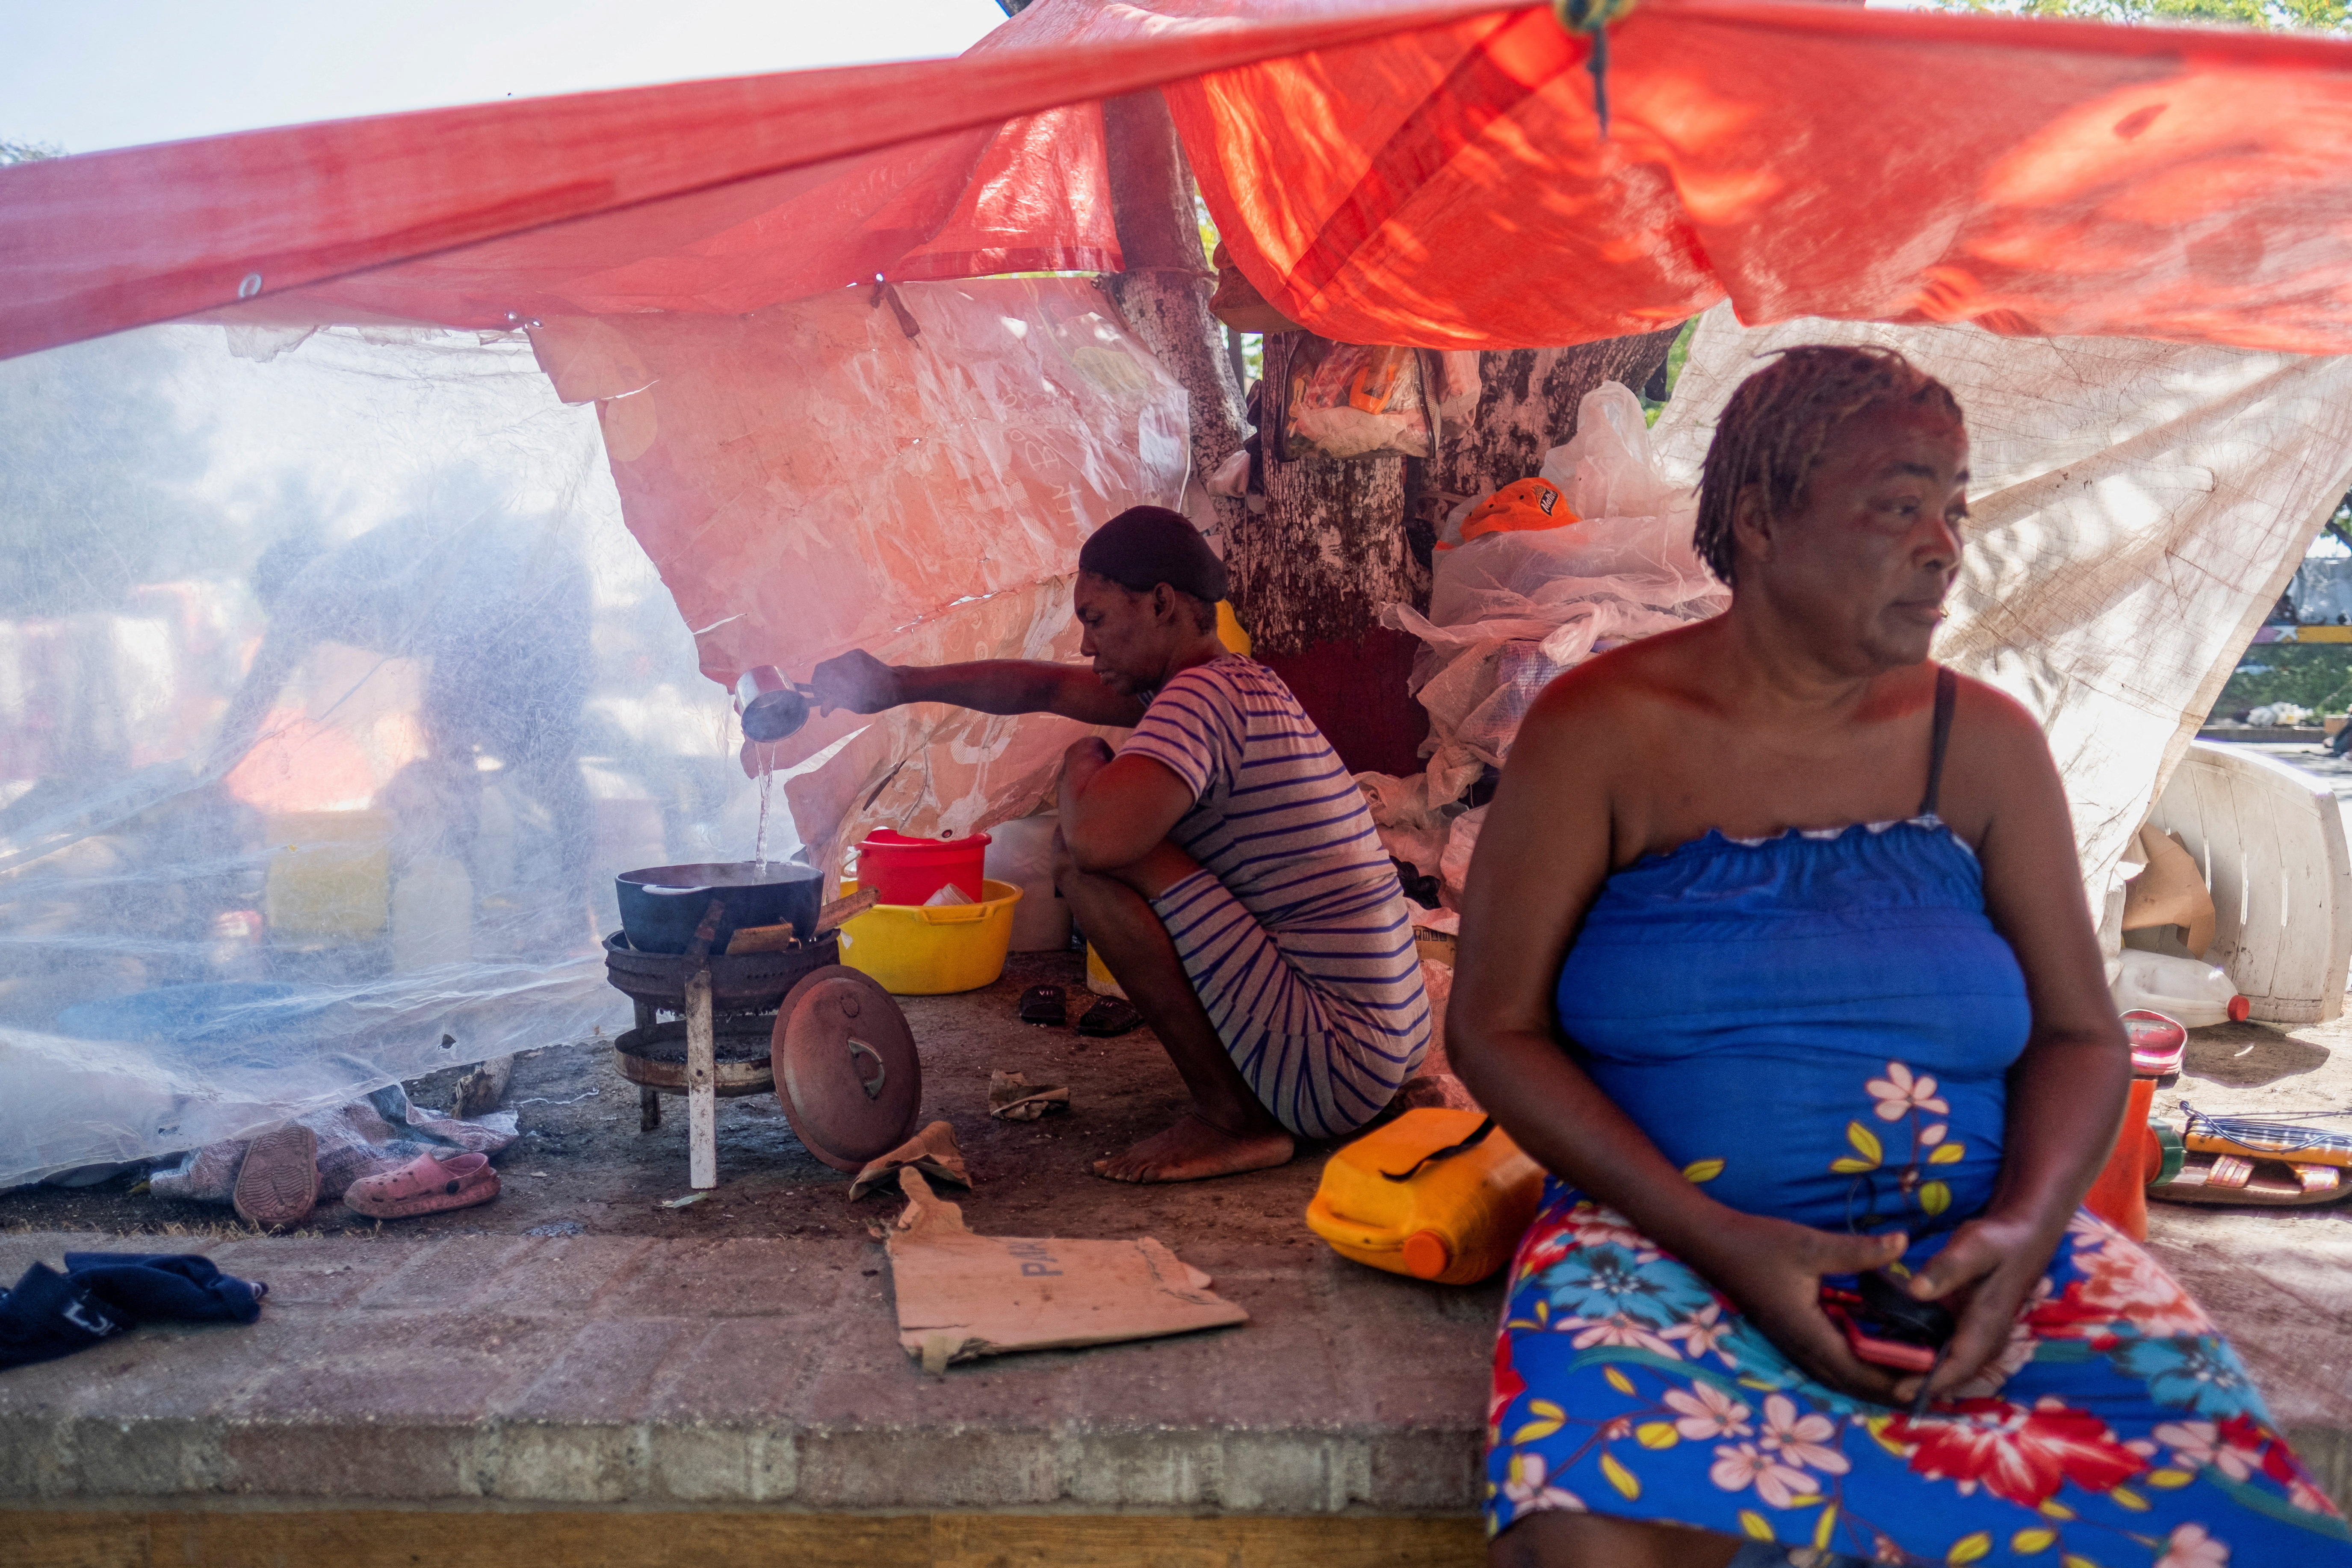 People displaced by gang war violence in Cite Soleil take refuge at the Hugo Chavez Square in Port-au-Prince.